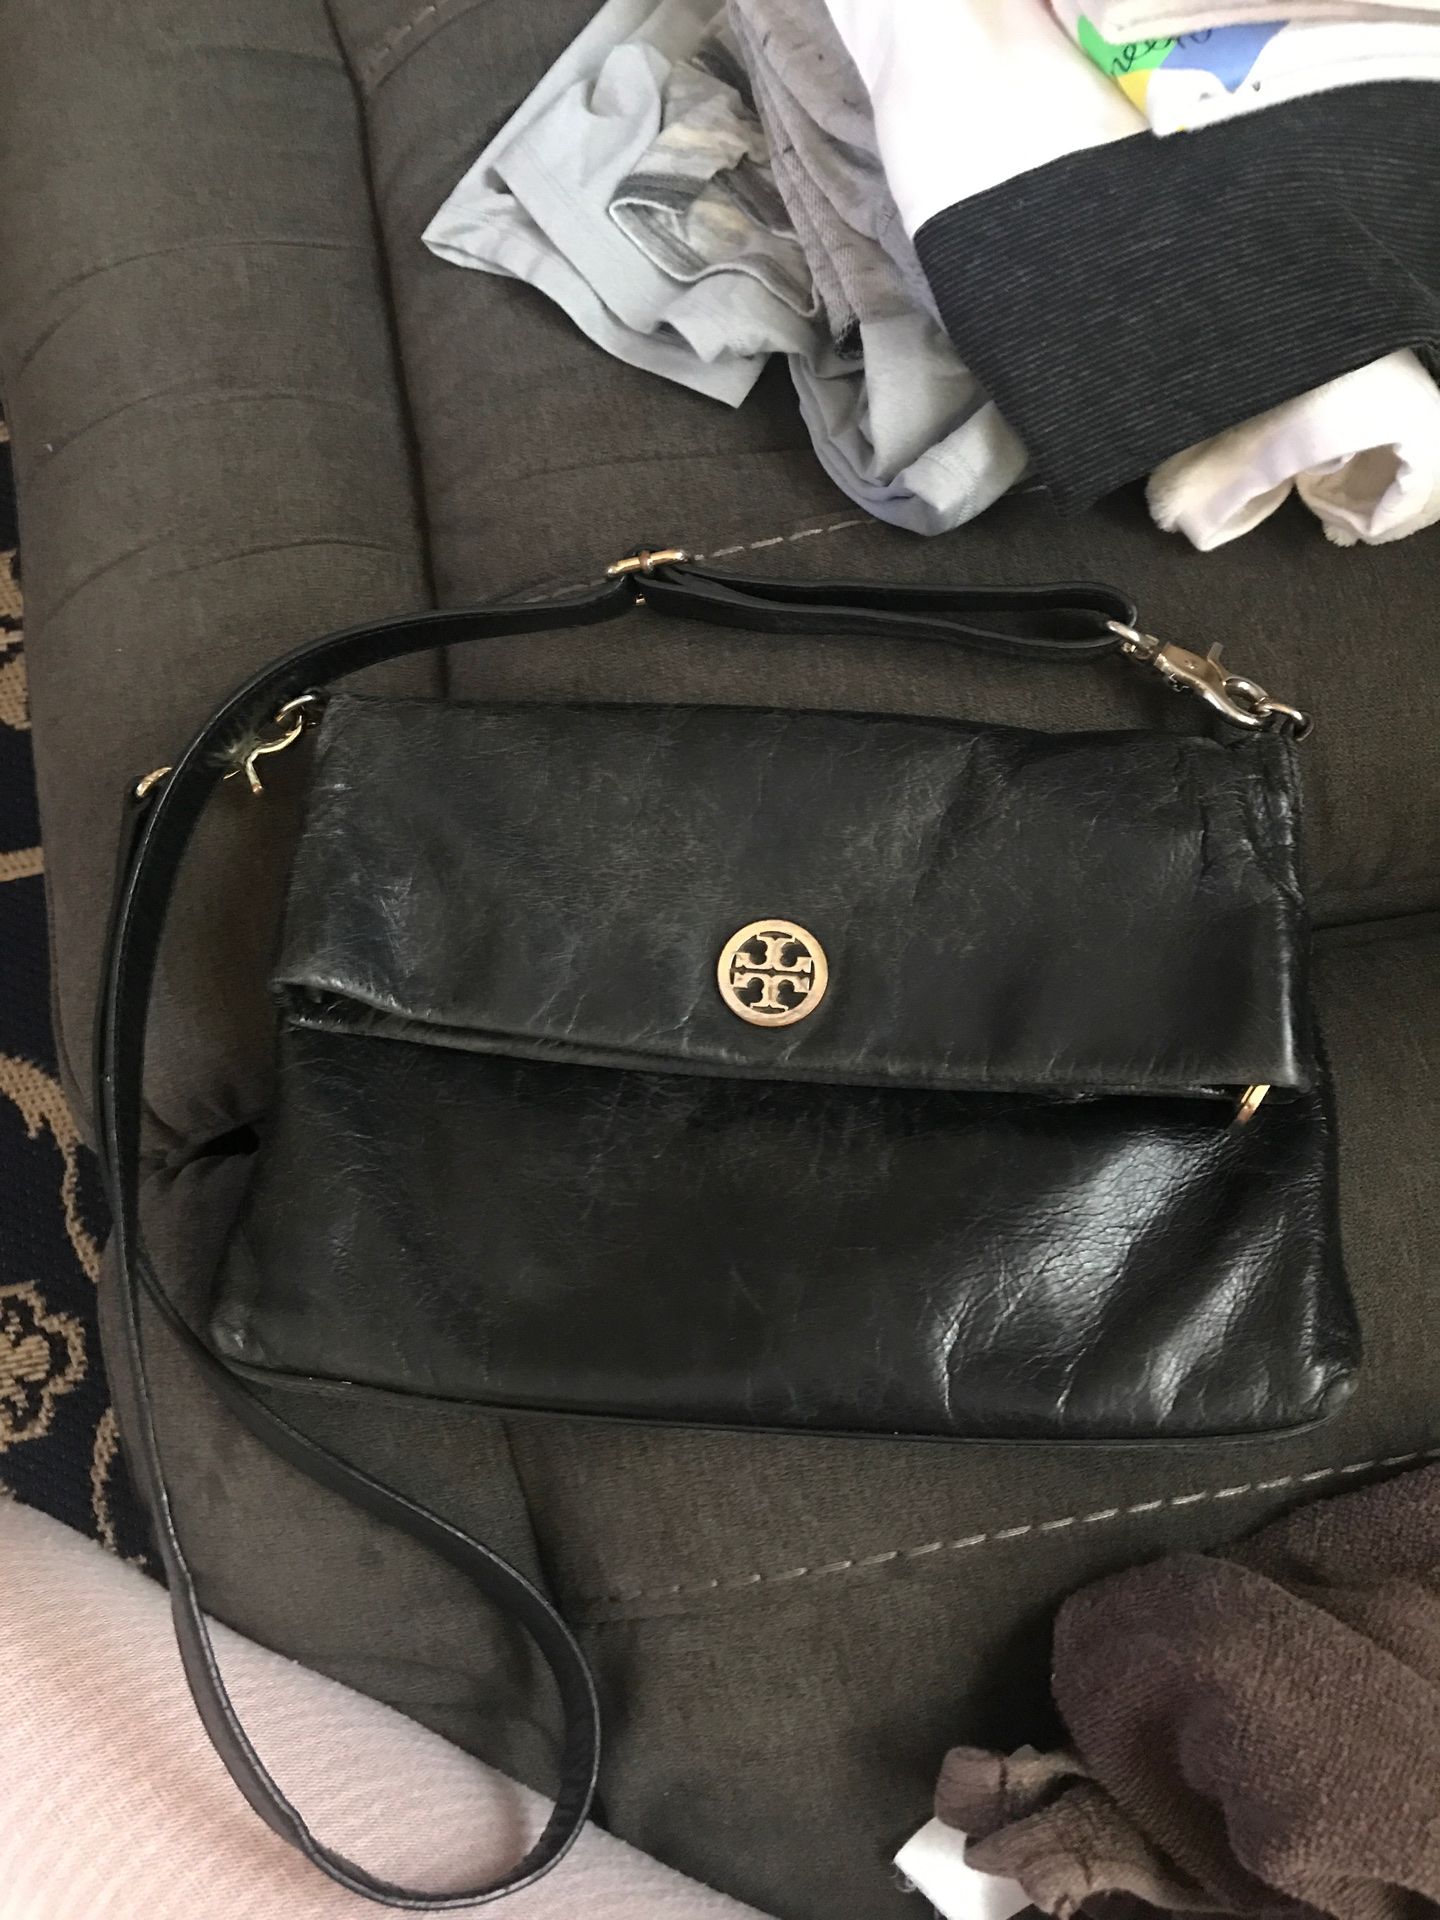 Tory Burch messenger bag. Used, inside very clean